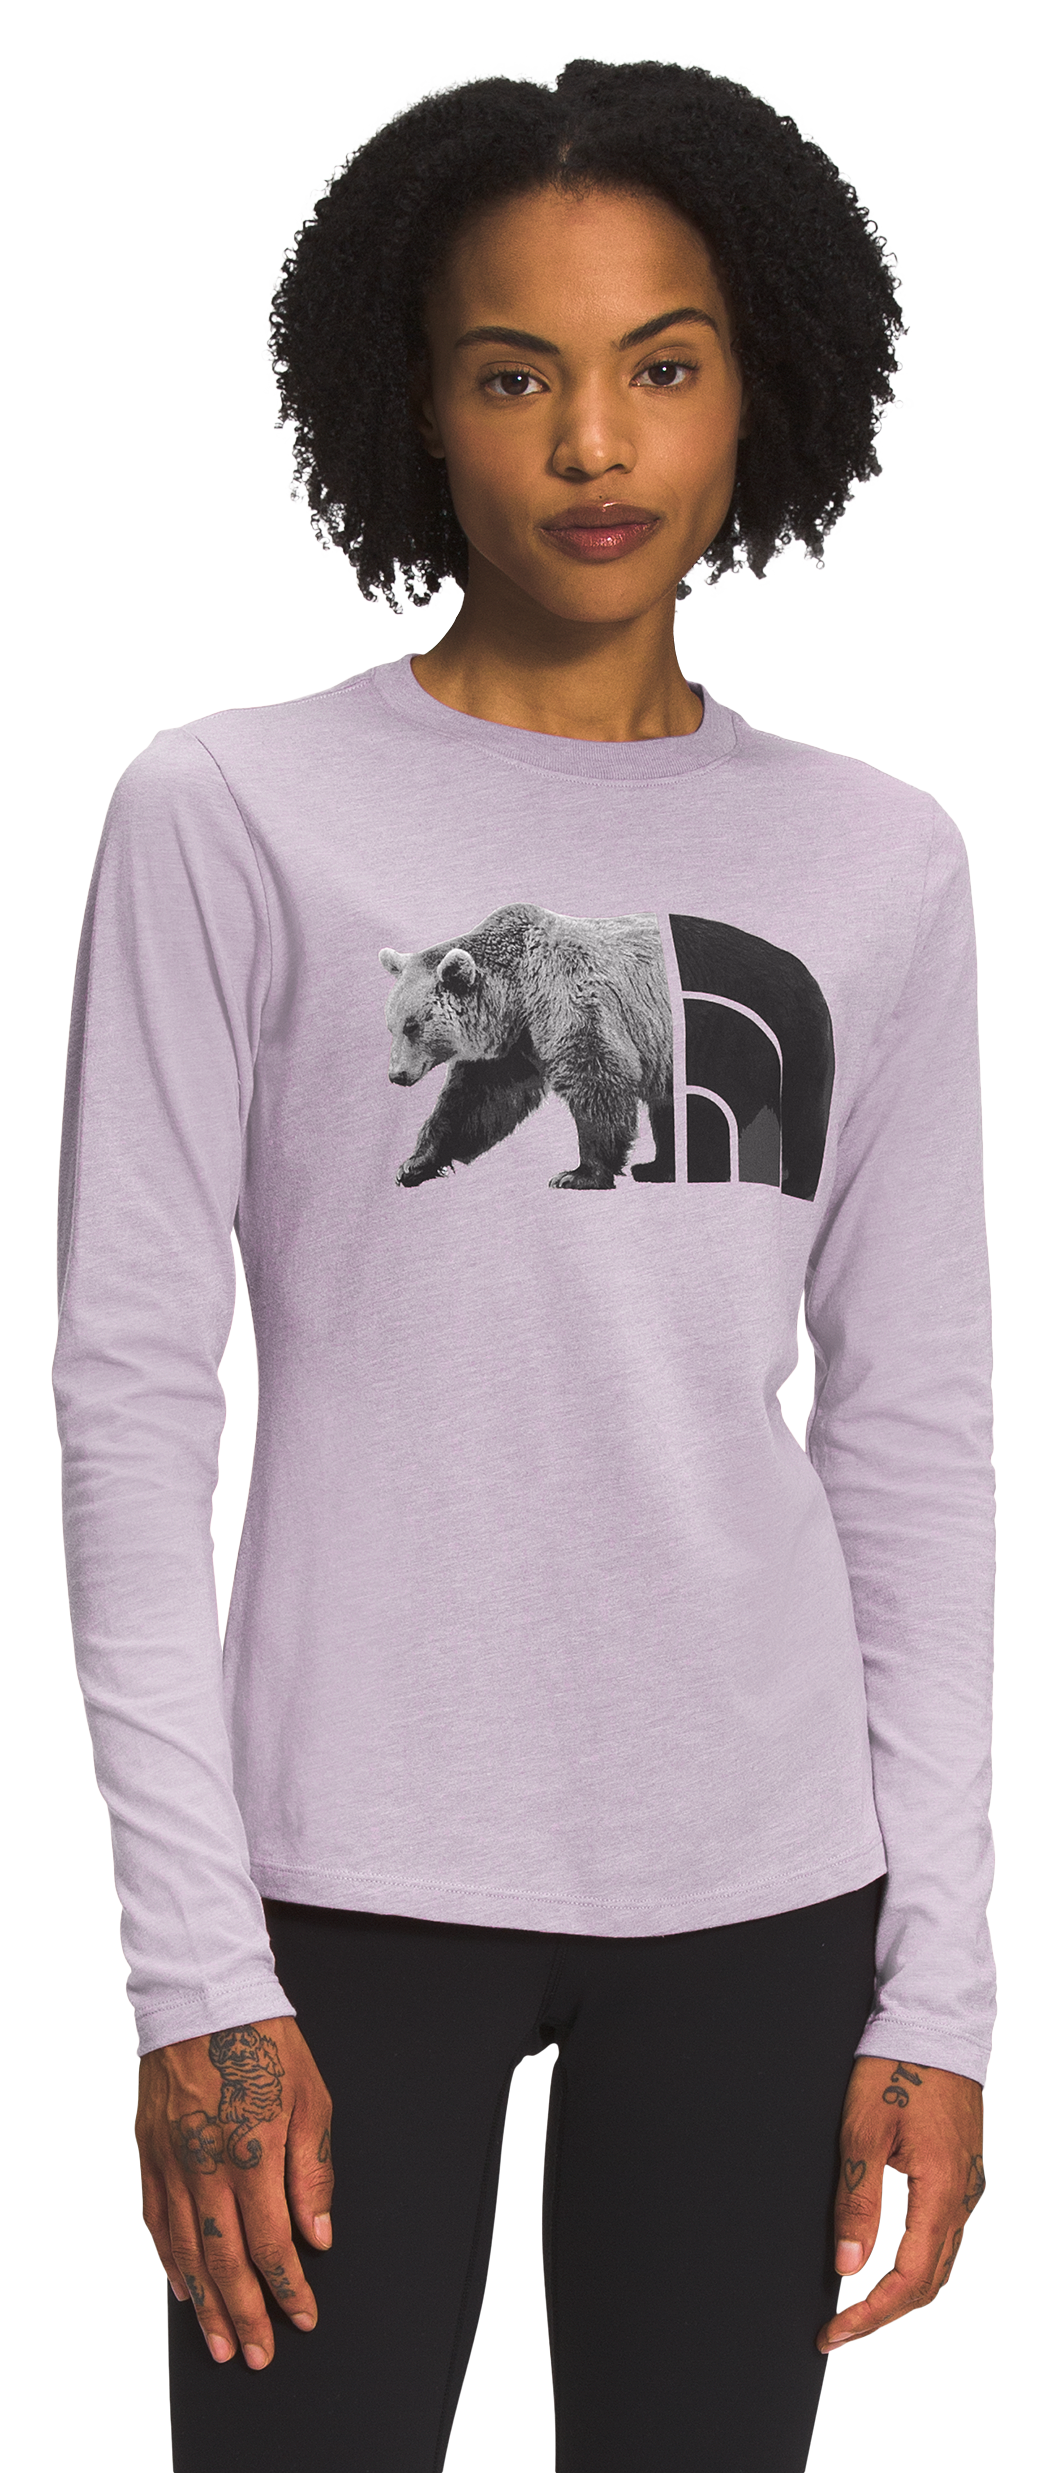 The North Face Tri-Blend Bear Long-Sleeve T-Shirt for Ladies - Lavender Fog Heather/TNF Black - M